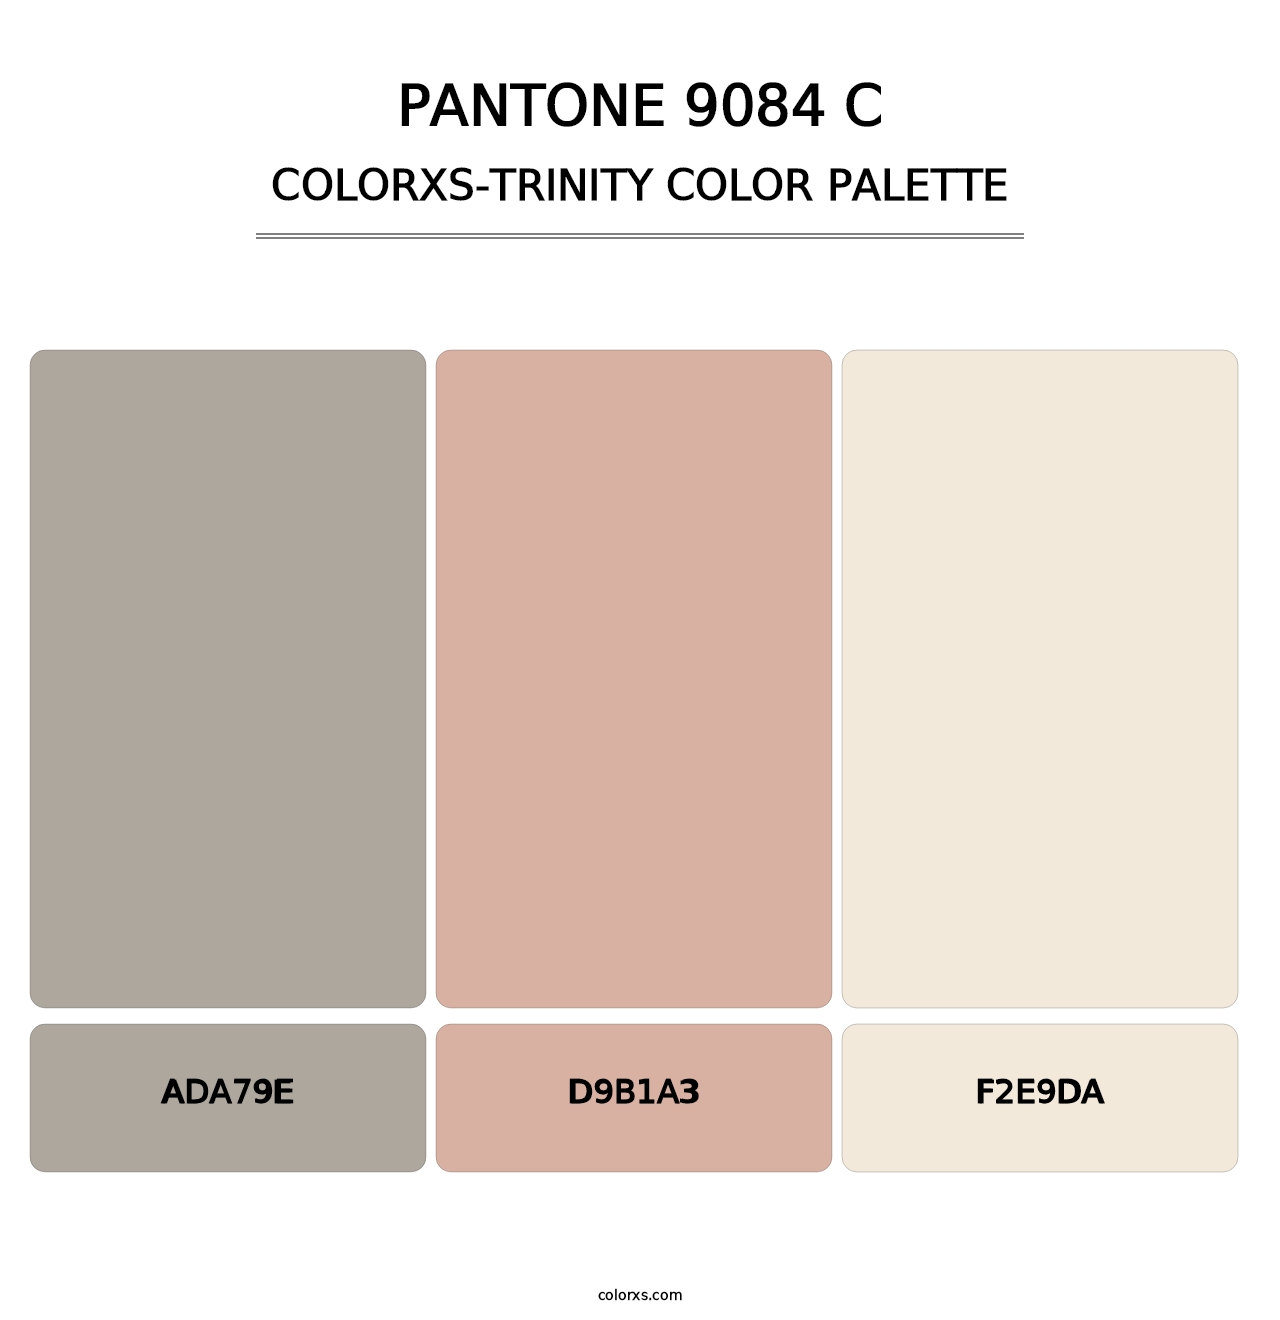 PANTONE 9084 C - Colorxs Trinity Palette